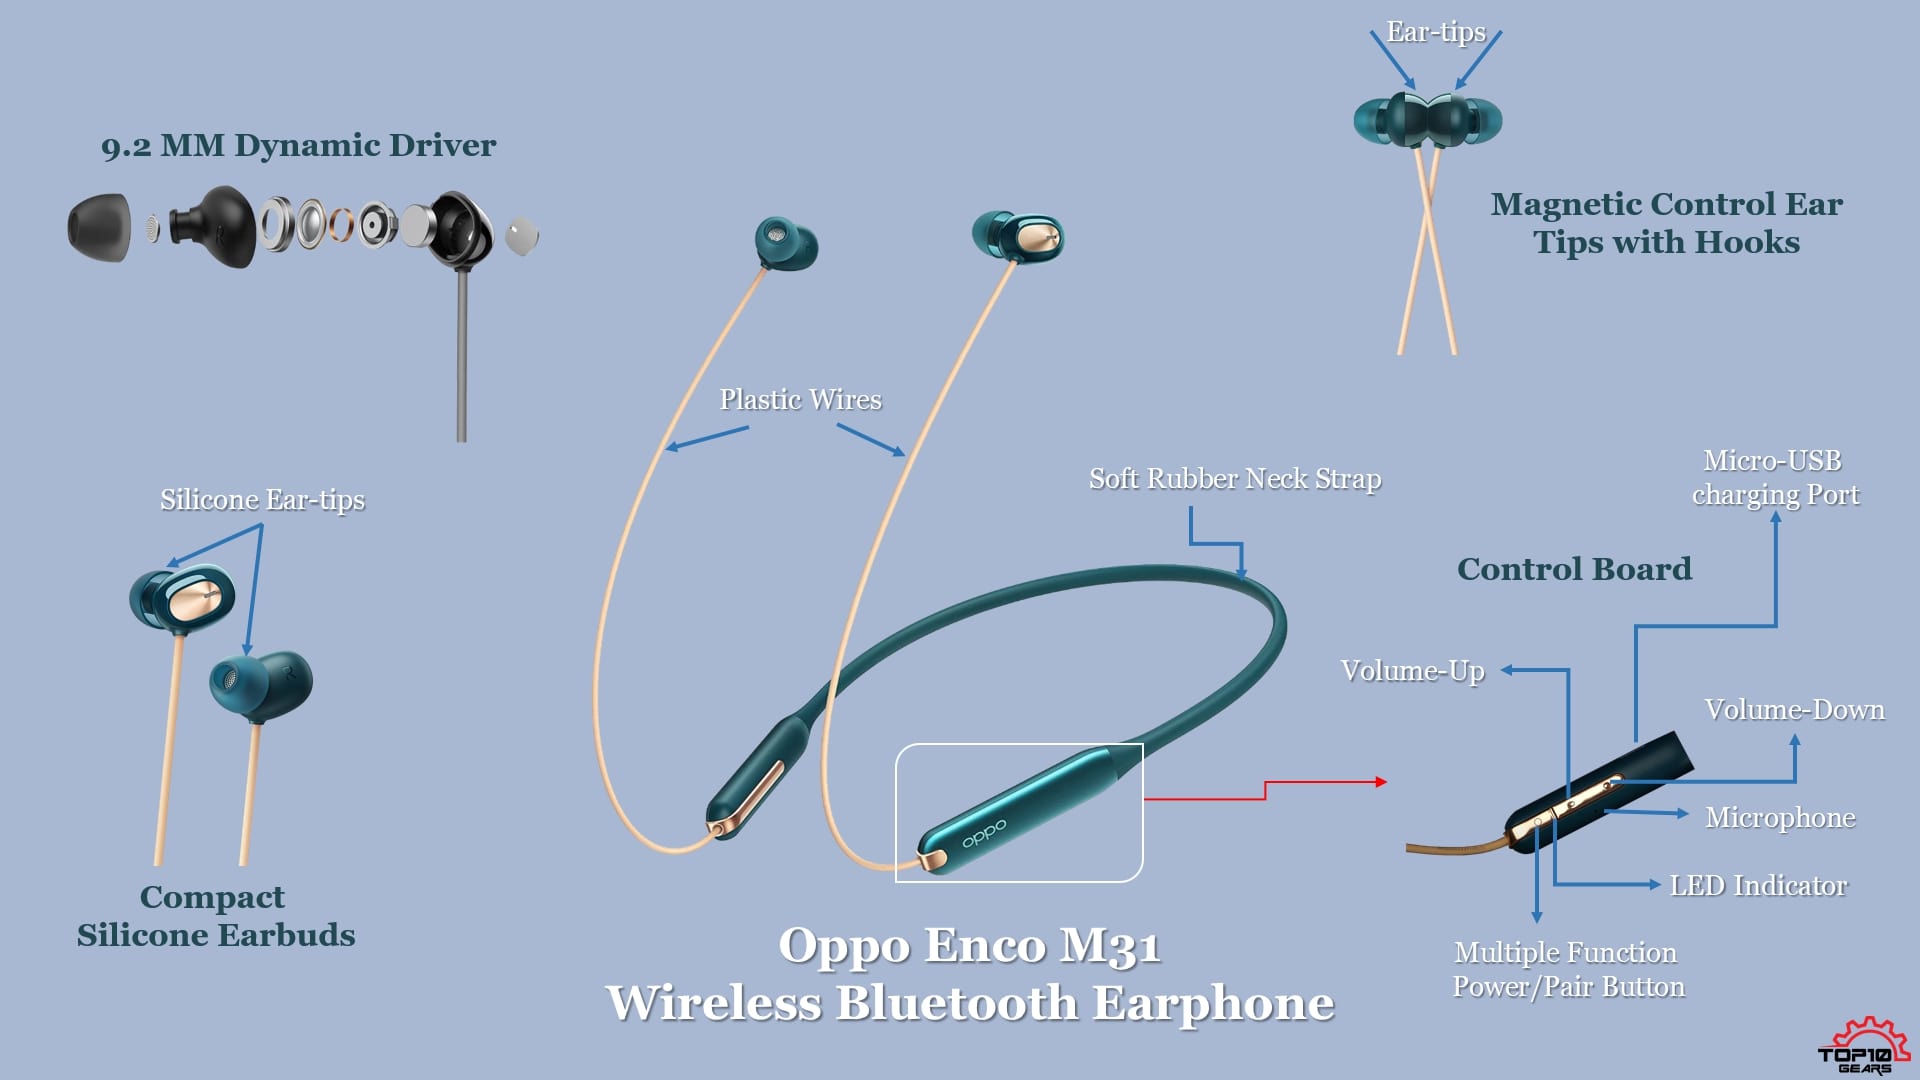 Design of Oppo enco m31 wireless bluetooth heaphone